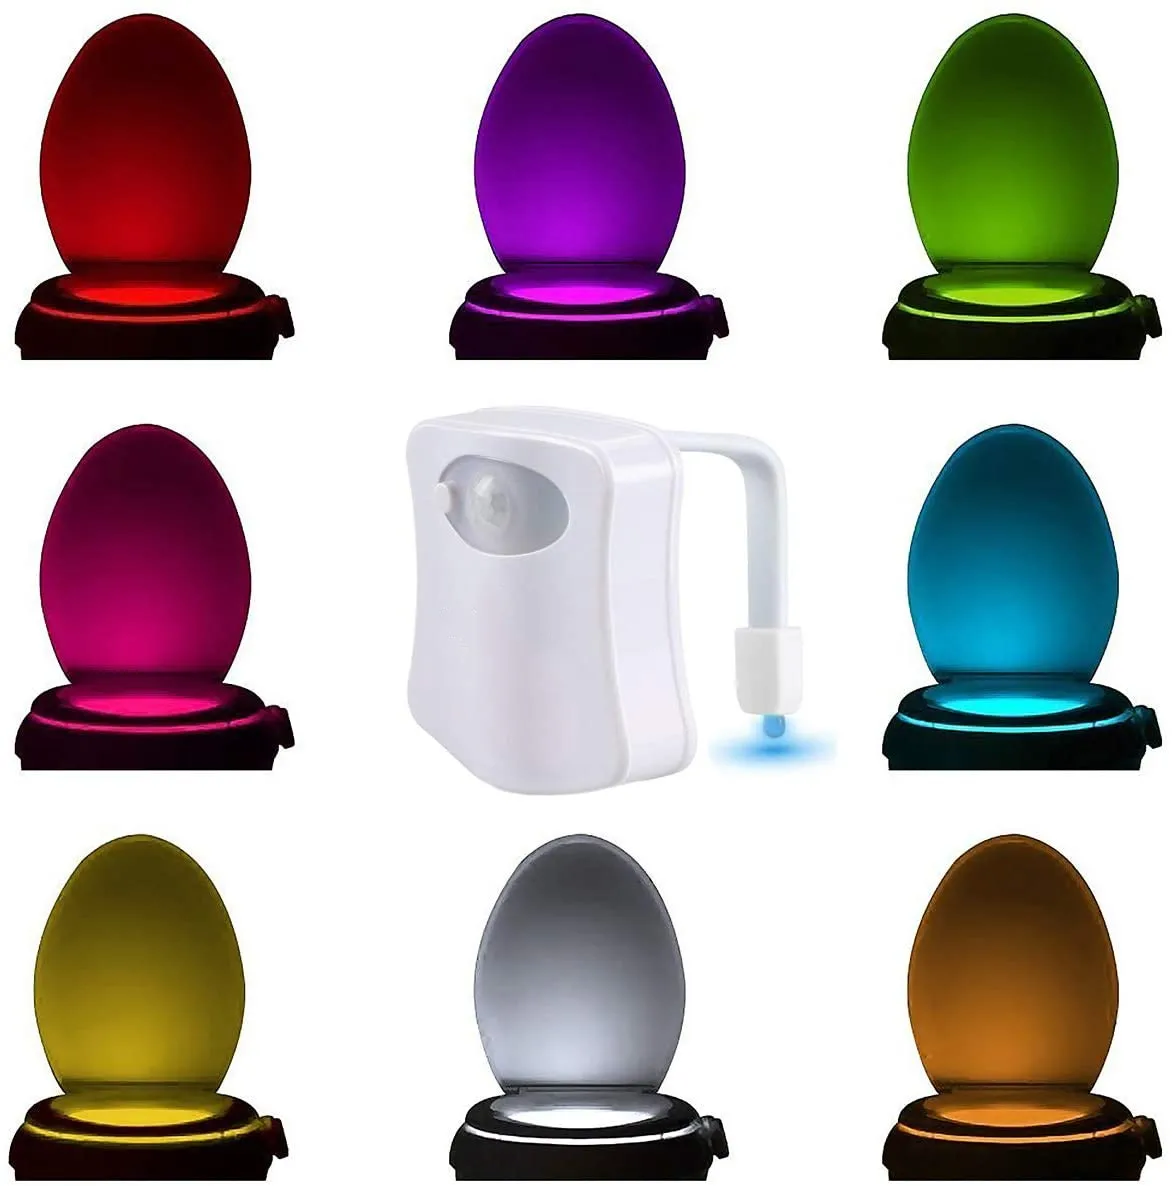 https://ae01.alicdn.com/kf/S1fefbc306a184aba9dd41aa0961cce86j/Smart-PIR-Motion-Sensor-Toilet-Seat-Night-Light-16-Color-Waterproof-Backlight-For-Toilet-Bowl-LED.jpg